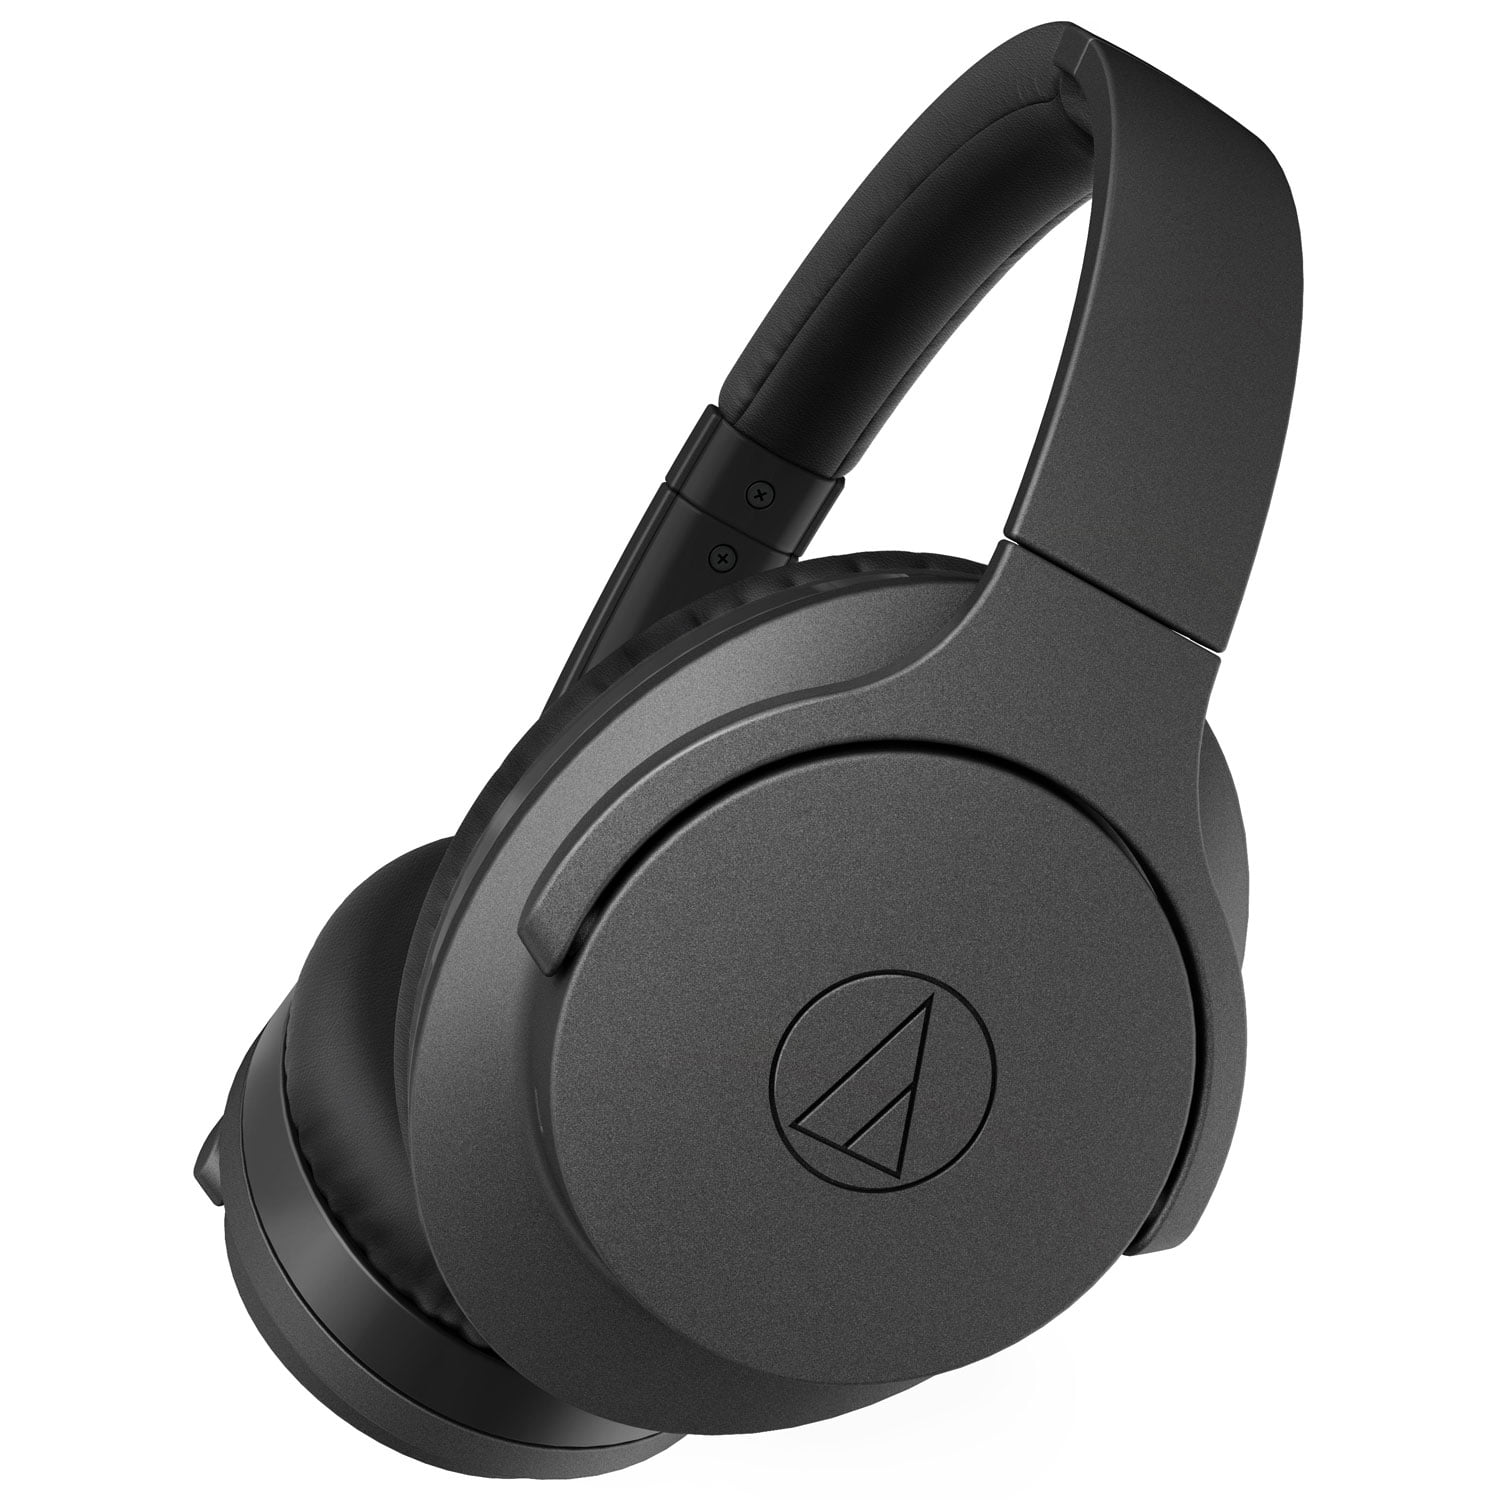 Audio-Technica ATH-SR50 Over-Ear High-Resolution Headphones - Walmart.com